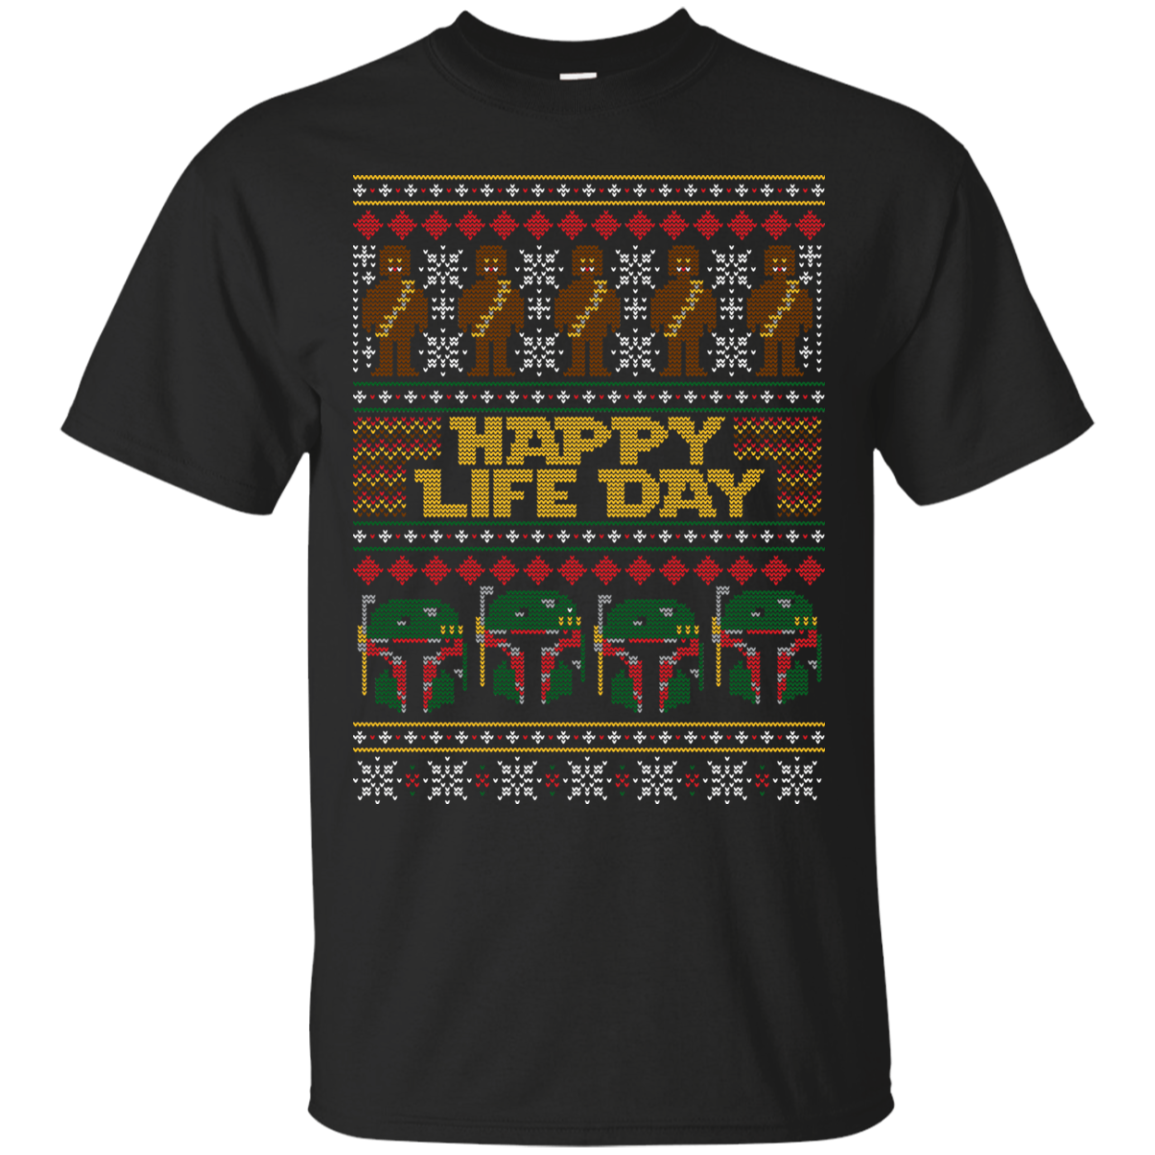 Happy Life Day T-Shirt